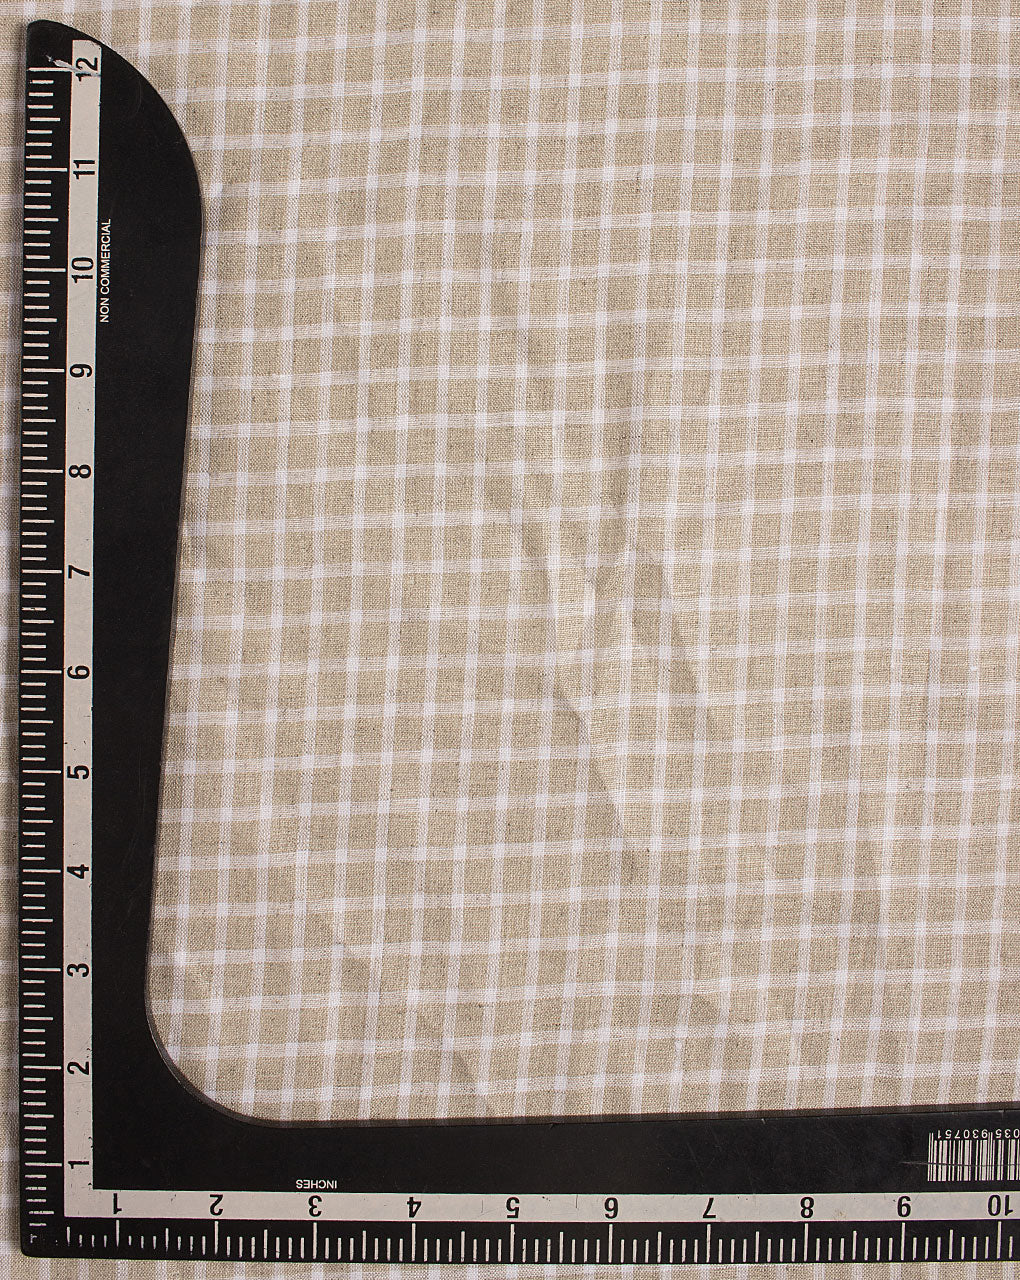 Checks Woven Hemp Fabric ( Width 58 Inch ) - Fabriclore.com